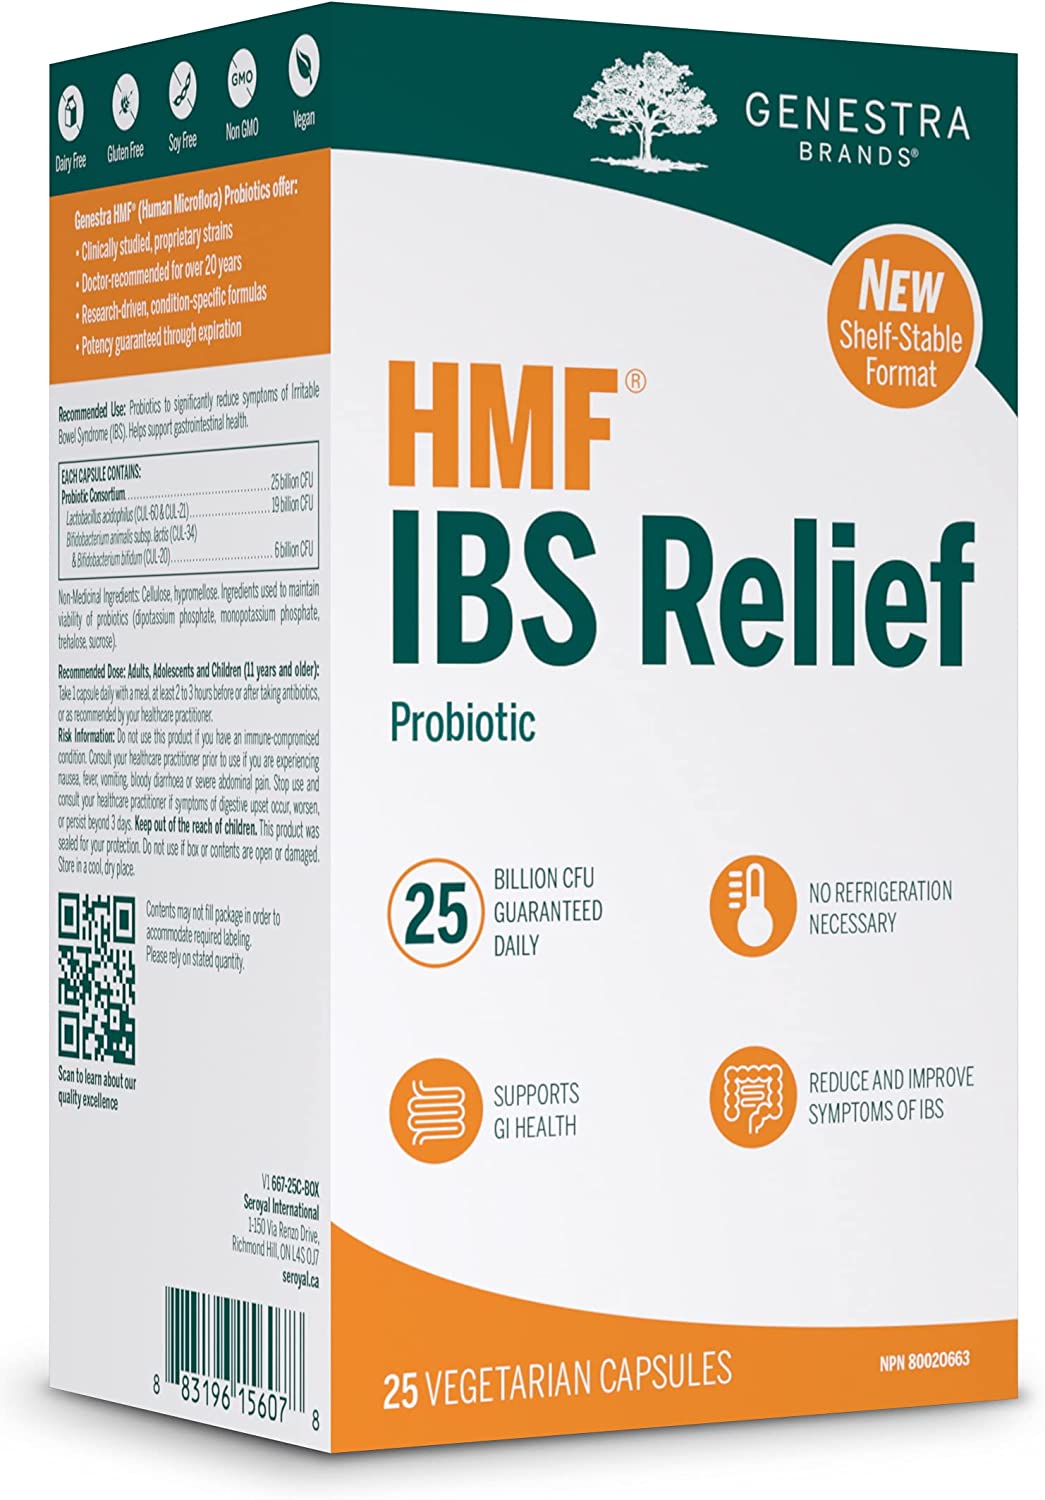 Genestra Brands HMF IBS Relief (shelf-stable)